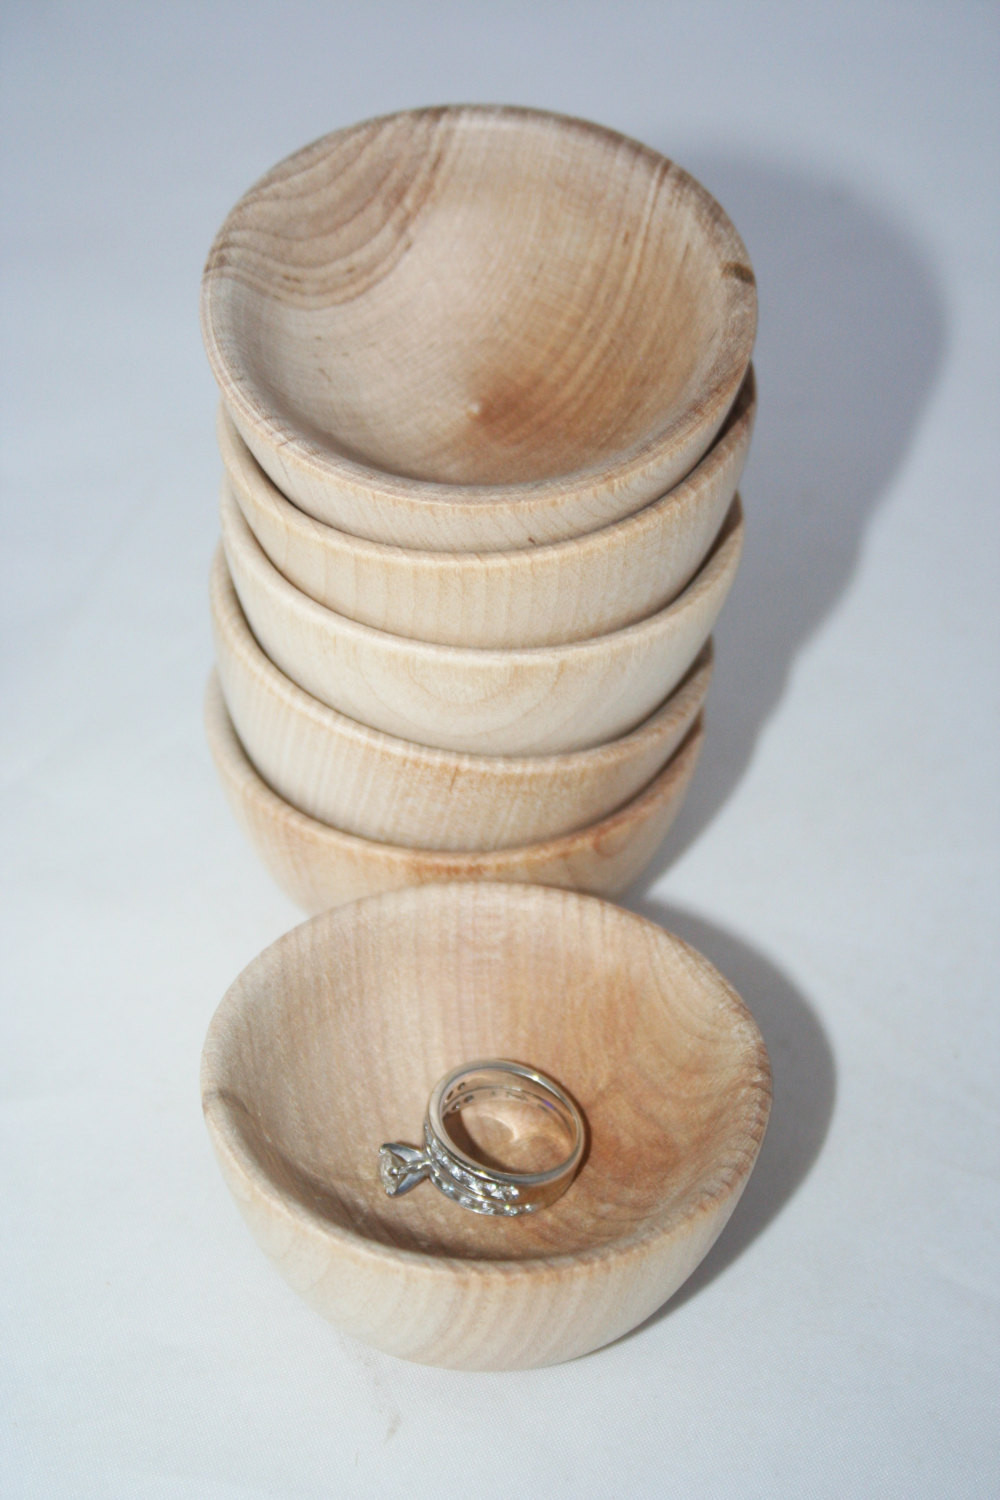 DIY Wooden Bowl
 1 2 5" DIY Wooden Bowl Small Bowl Jewlery Bowl Toy